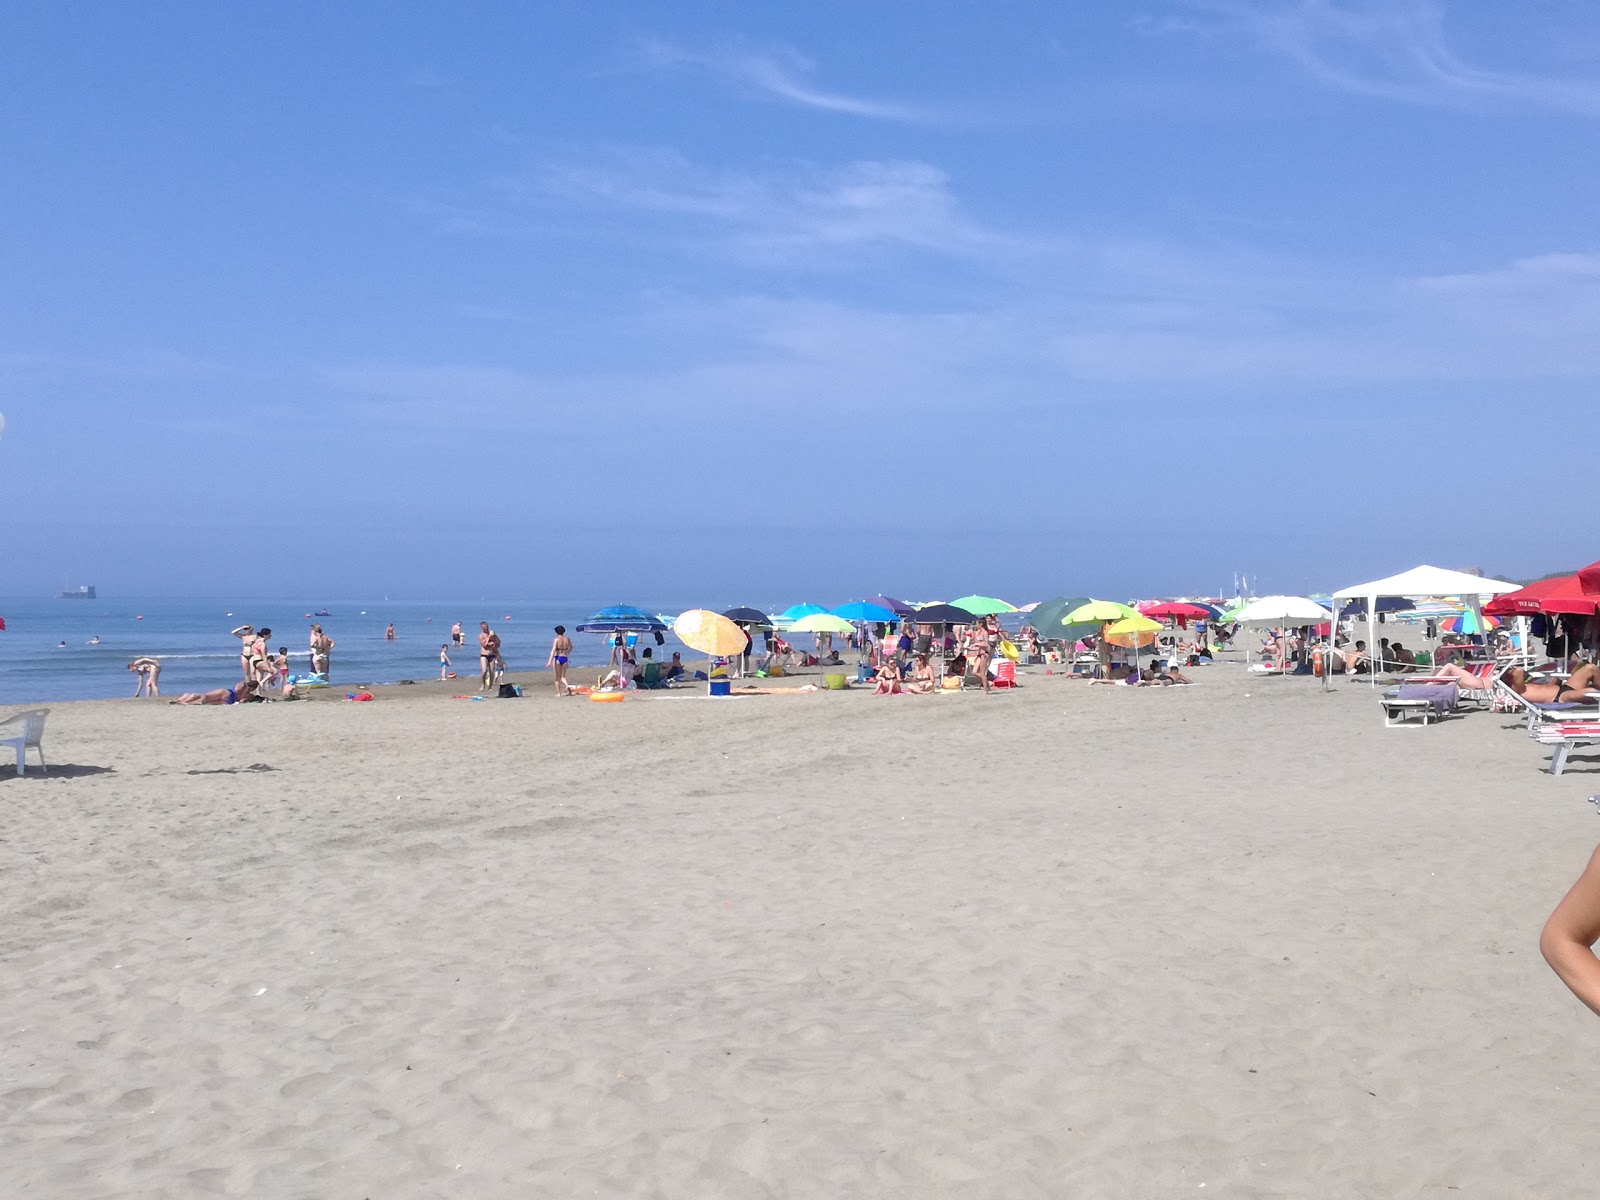 Photo of Spiaggia Attrezzata and the settlement